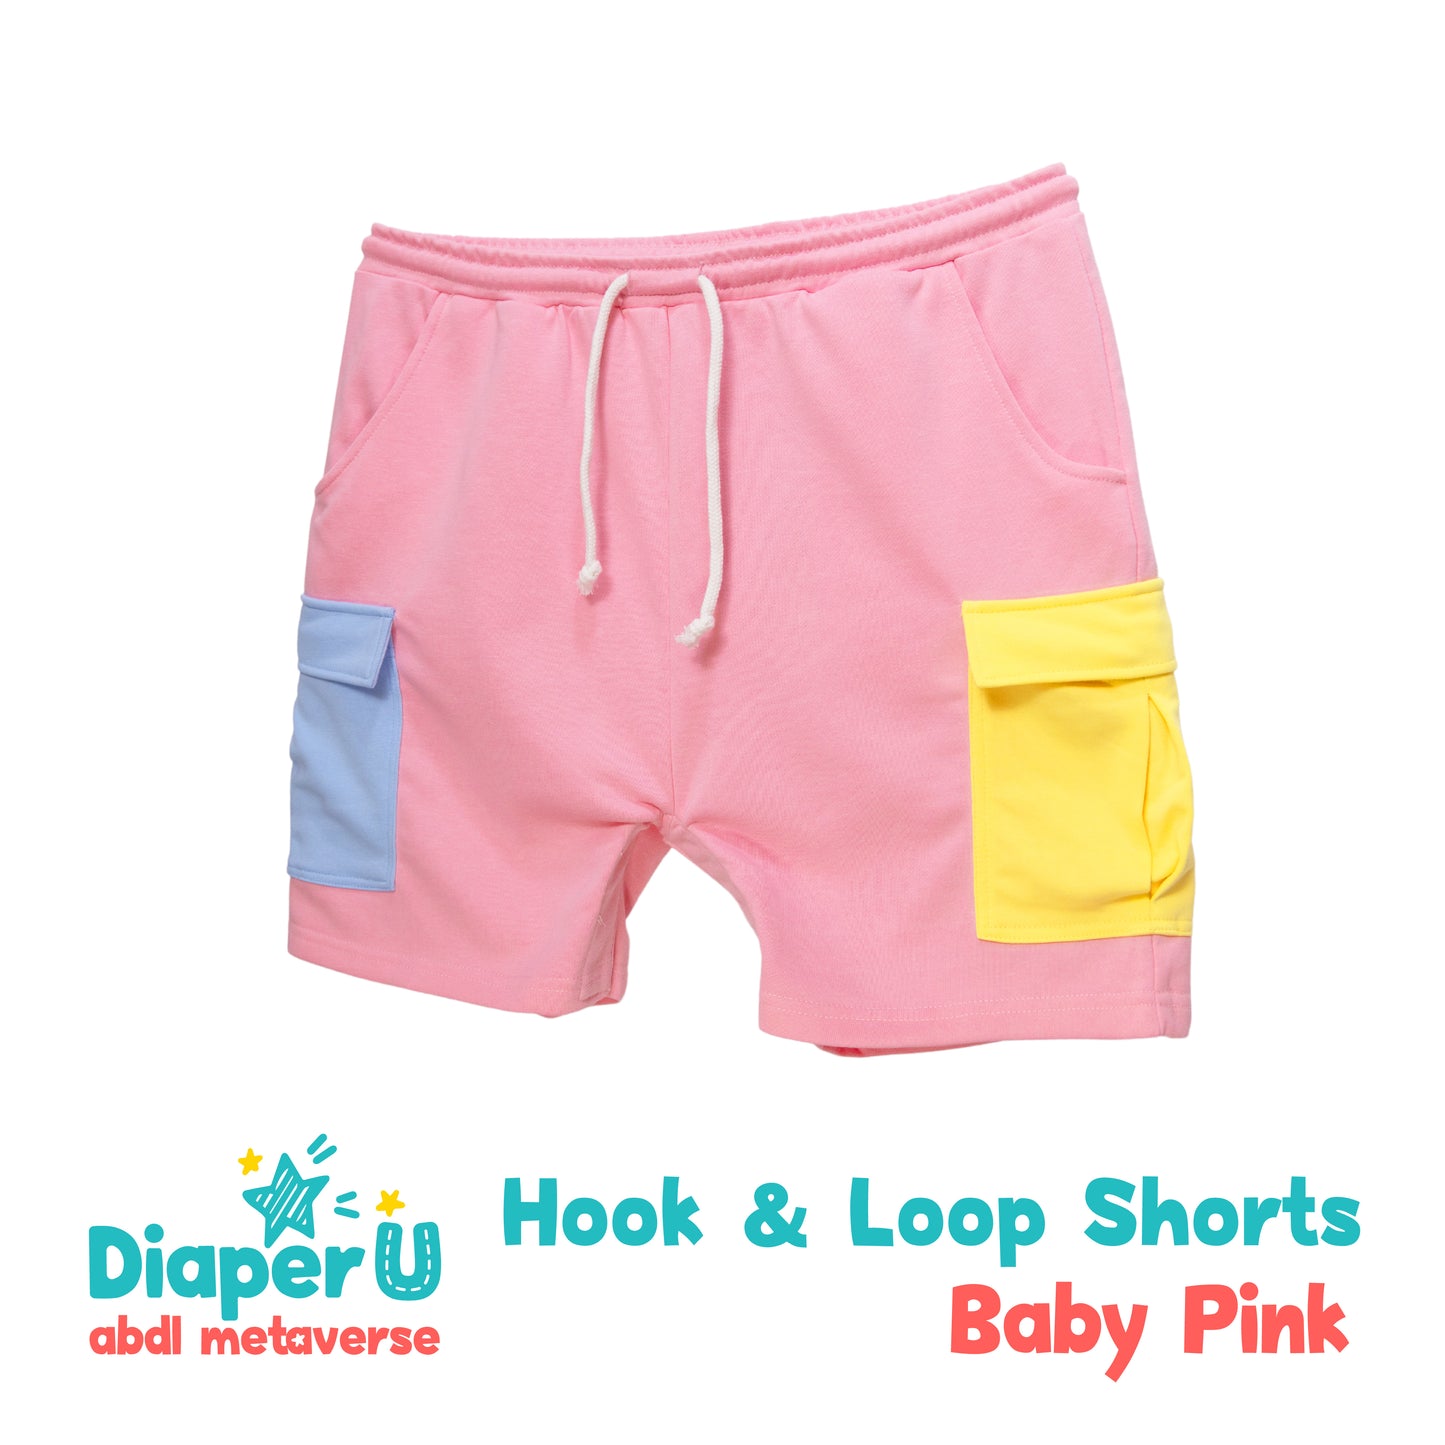 Hook & Loop Shorts - Baby Pink (Limited Edition)